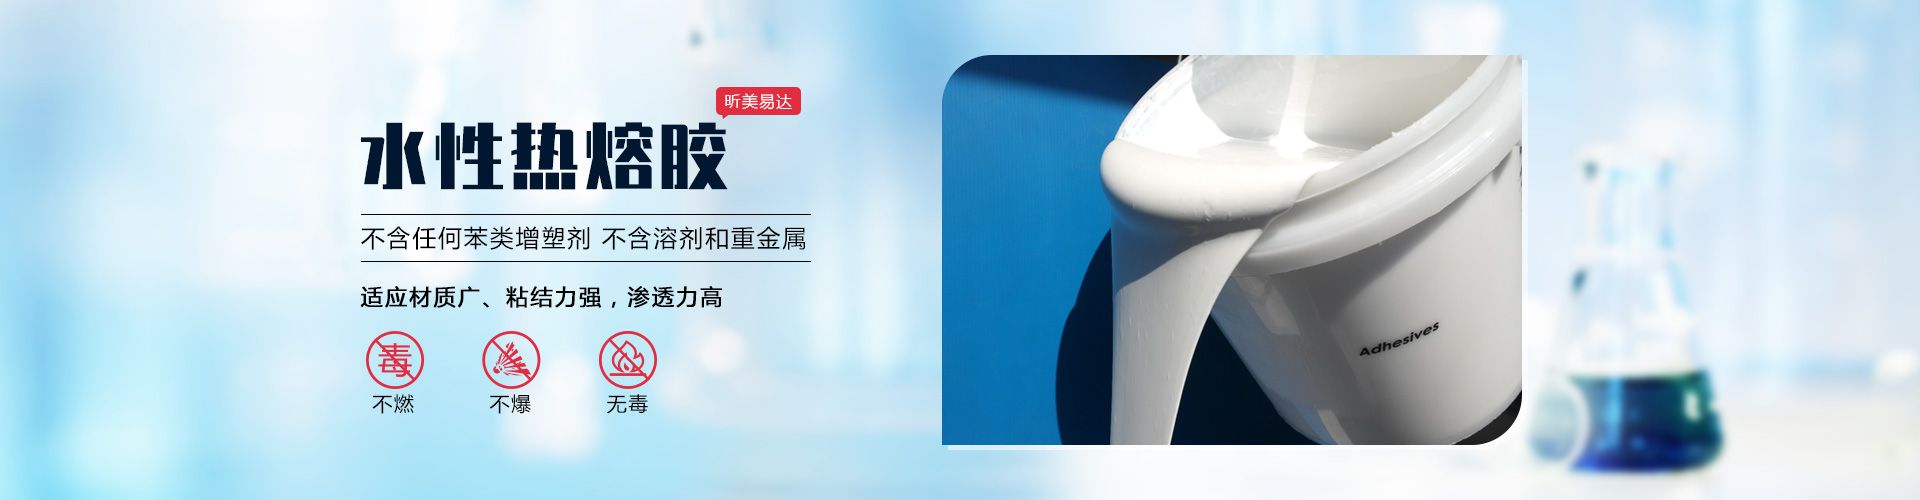 kaiyun188
专业生产kaiyun登录中国
,开云棋牌官网登录入口手机版
等系列产品.